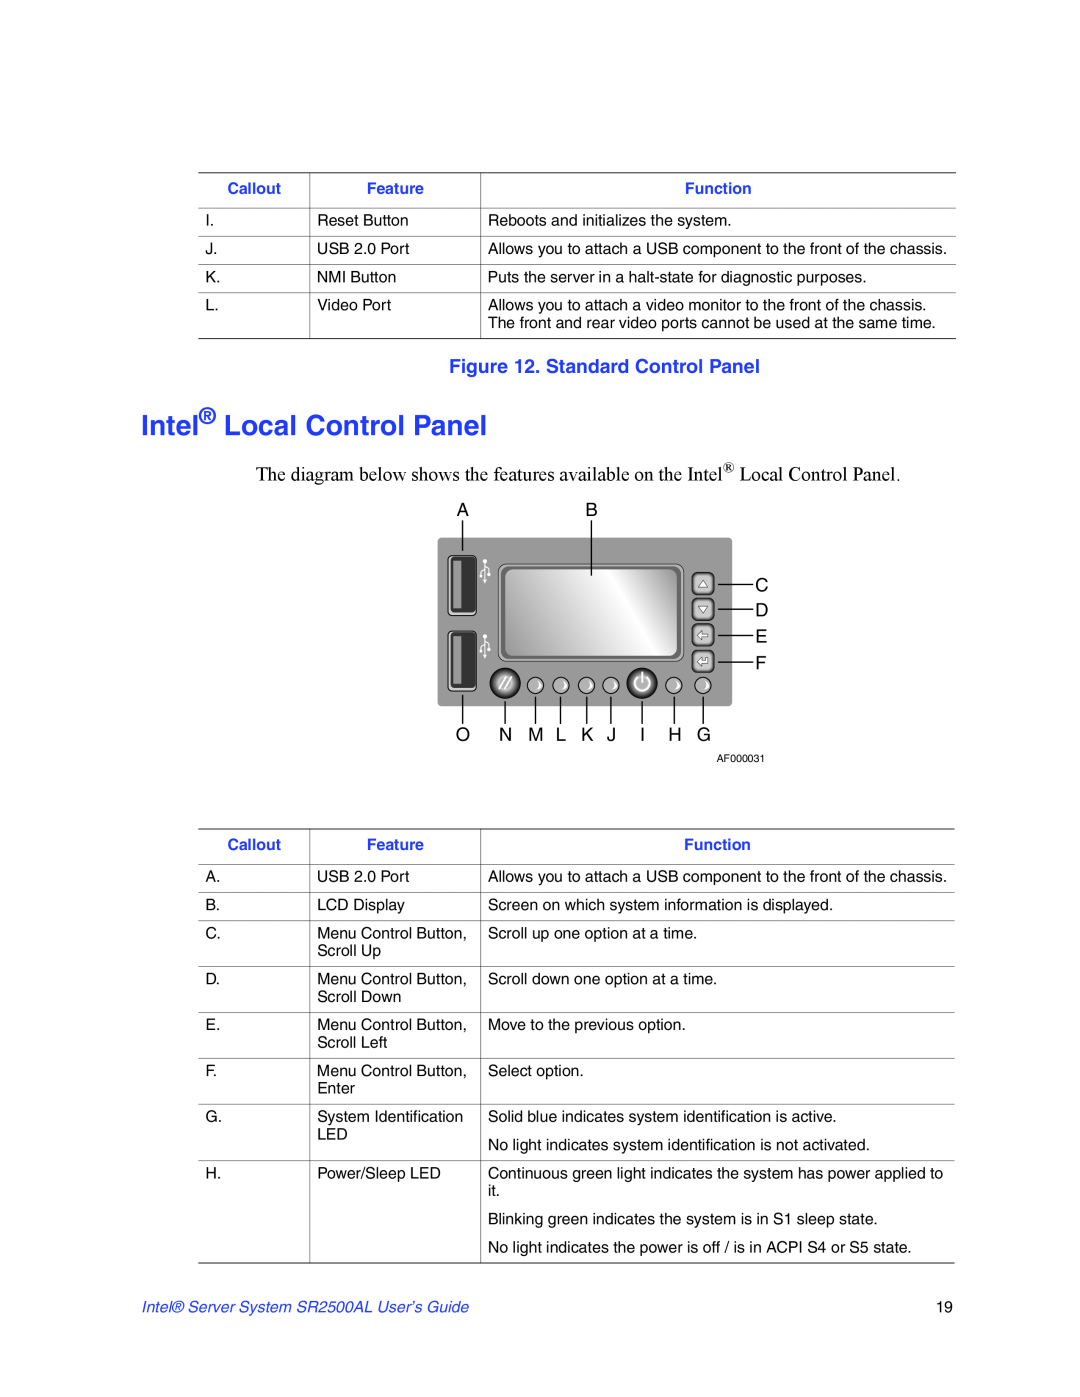 Intel SR2500AL manual Intel Local Control Panel, Standard Control Panel, N M L K J I H G 